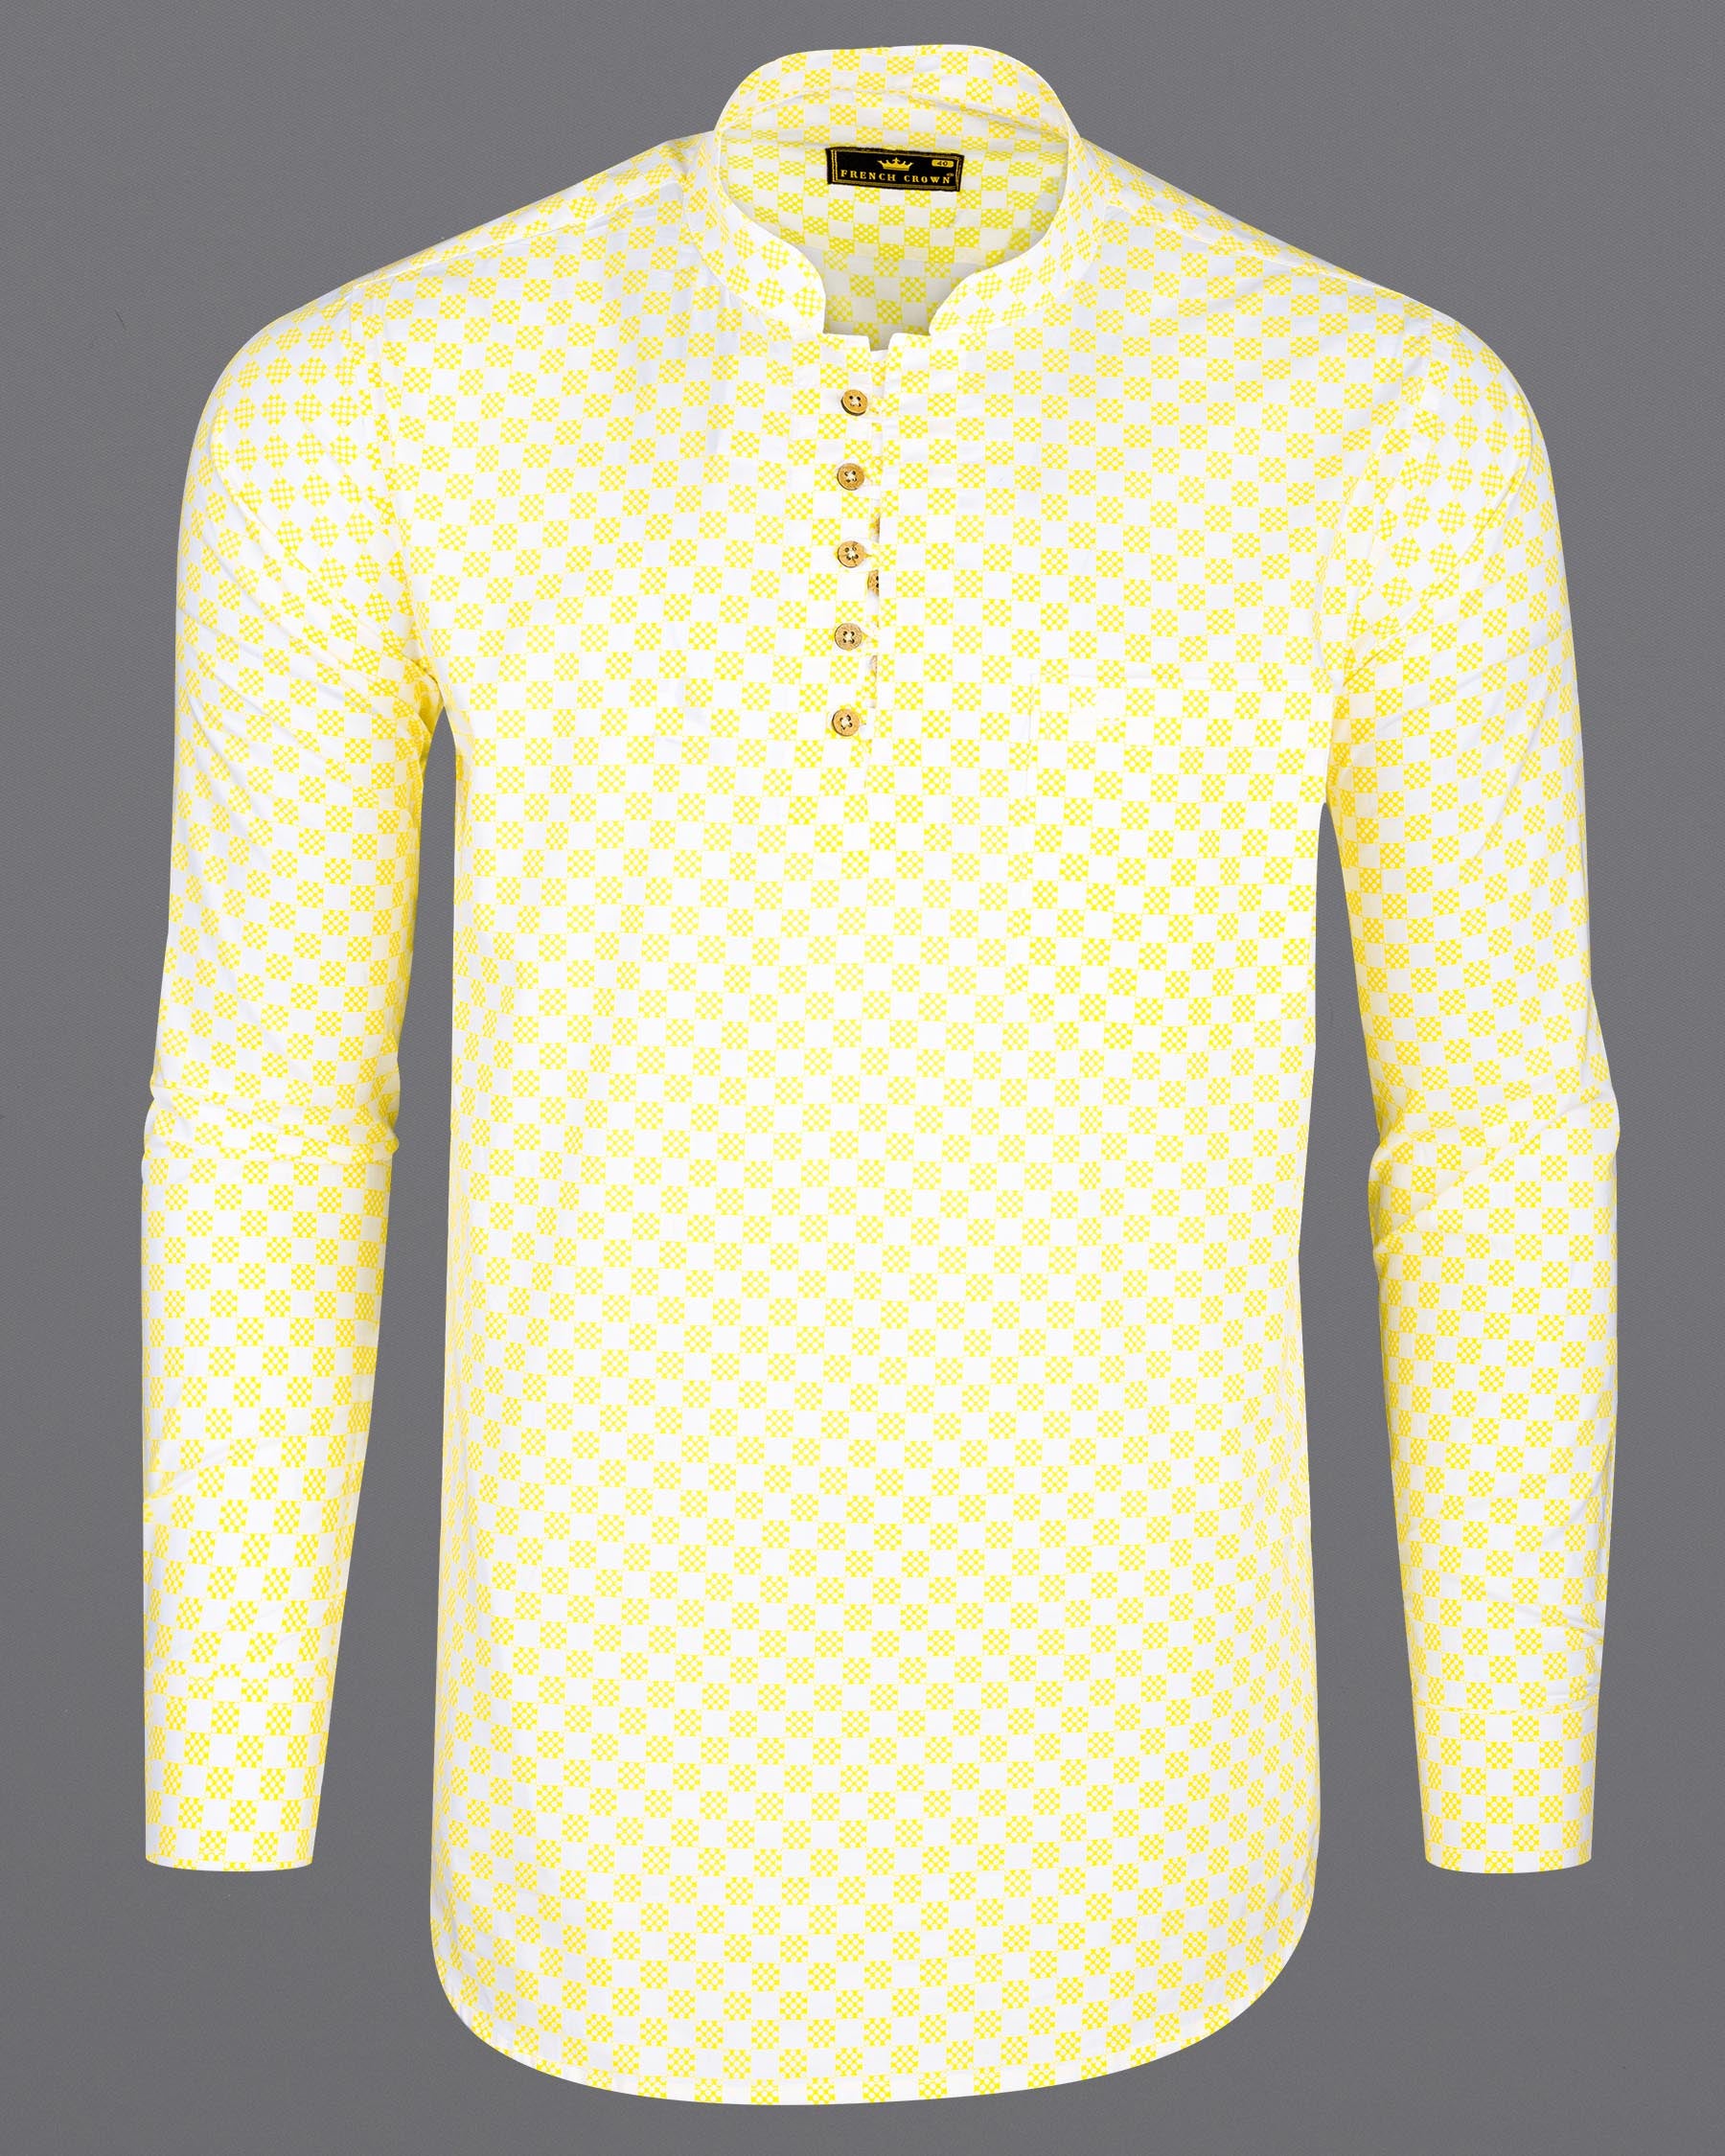 Custard Yellow with Bright White Square Printed Premium Cotton Kurta Shirt 6967-KS-38,6967-KS-38,6967-KS-39,6967-KS-39,6967-KS-40,6967-KS-40,6967-KS-42,6967-KS-42,6967-KS-44,6967-KS-44,6967-KS-46,6967-KS-46,6967-KS-48,6967-KS-48,6967-KS-50,6967-KS-50,6967-KS-52,6967-KS-52